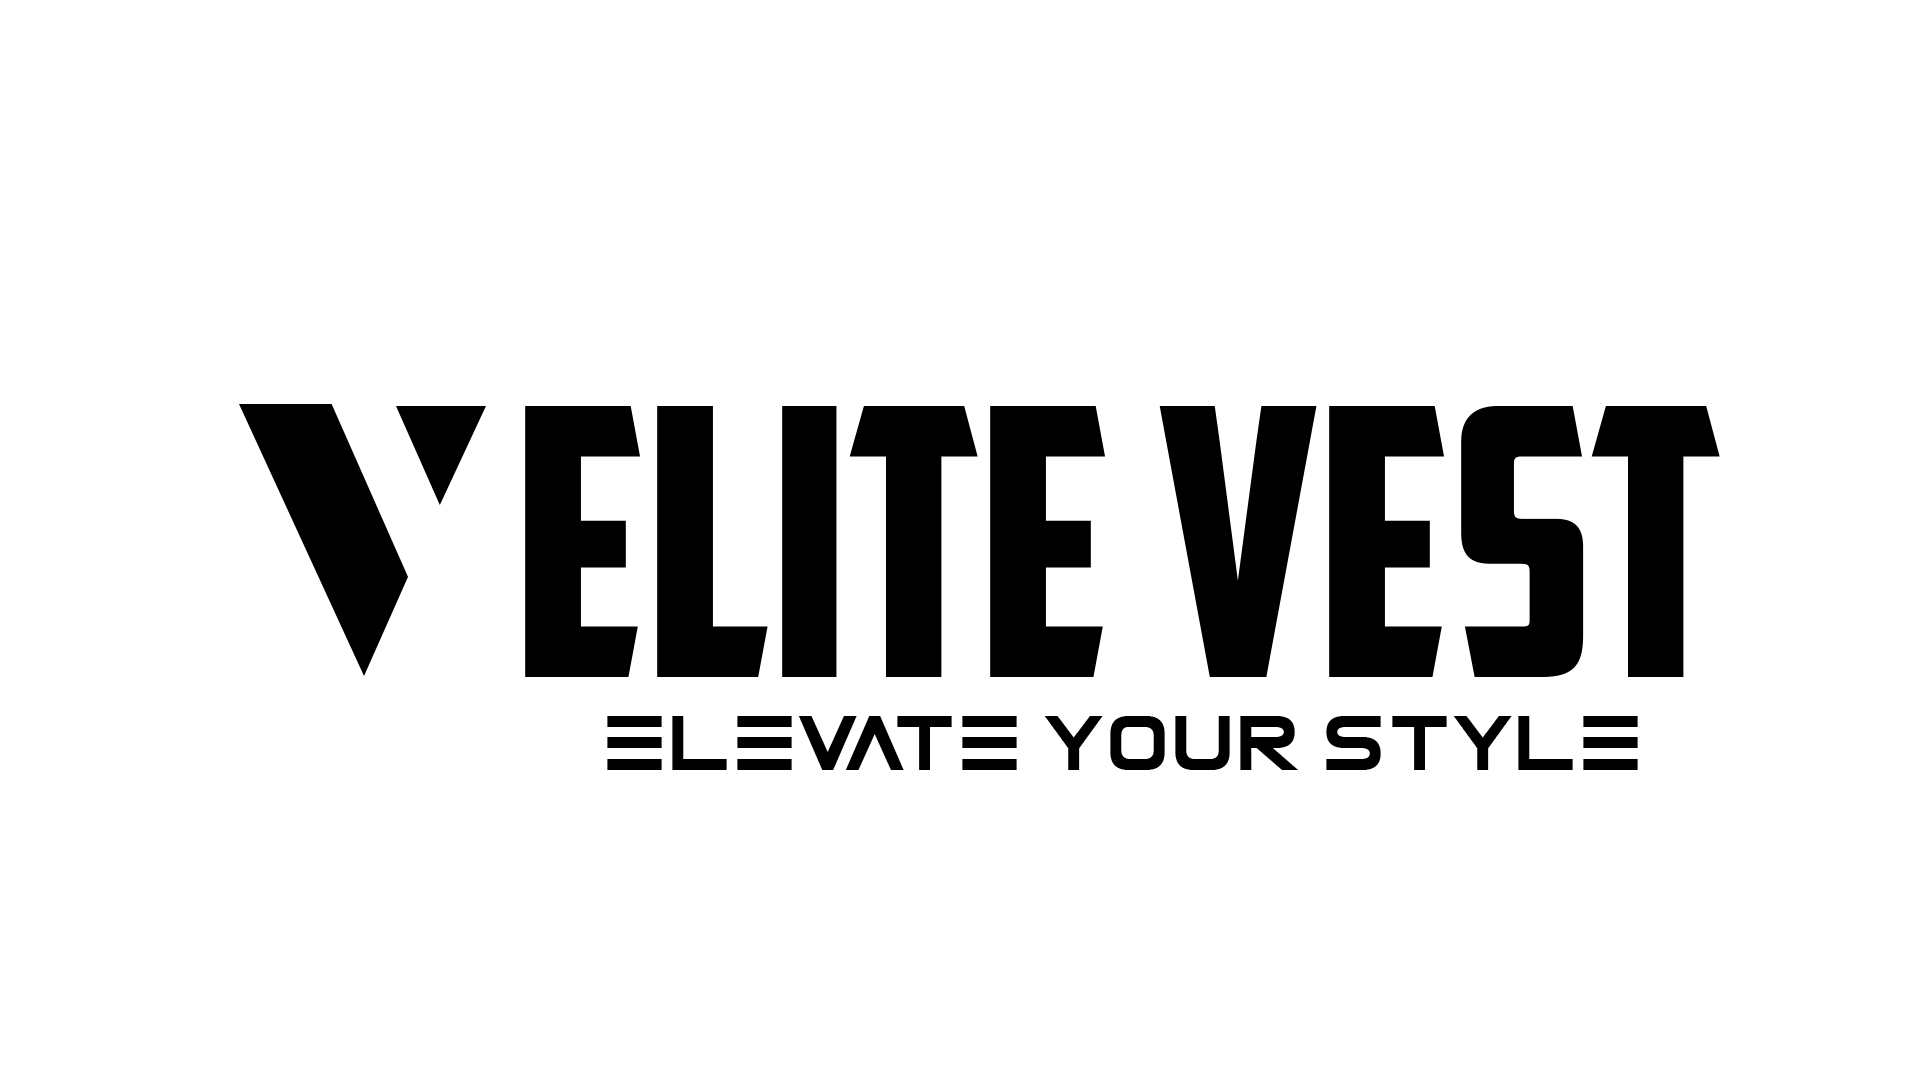 Elite vest & Leather baba collaboration